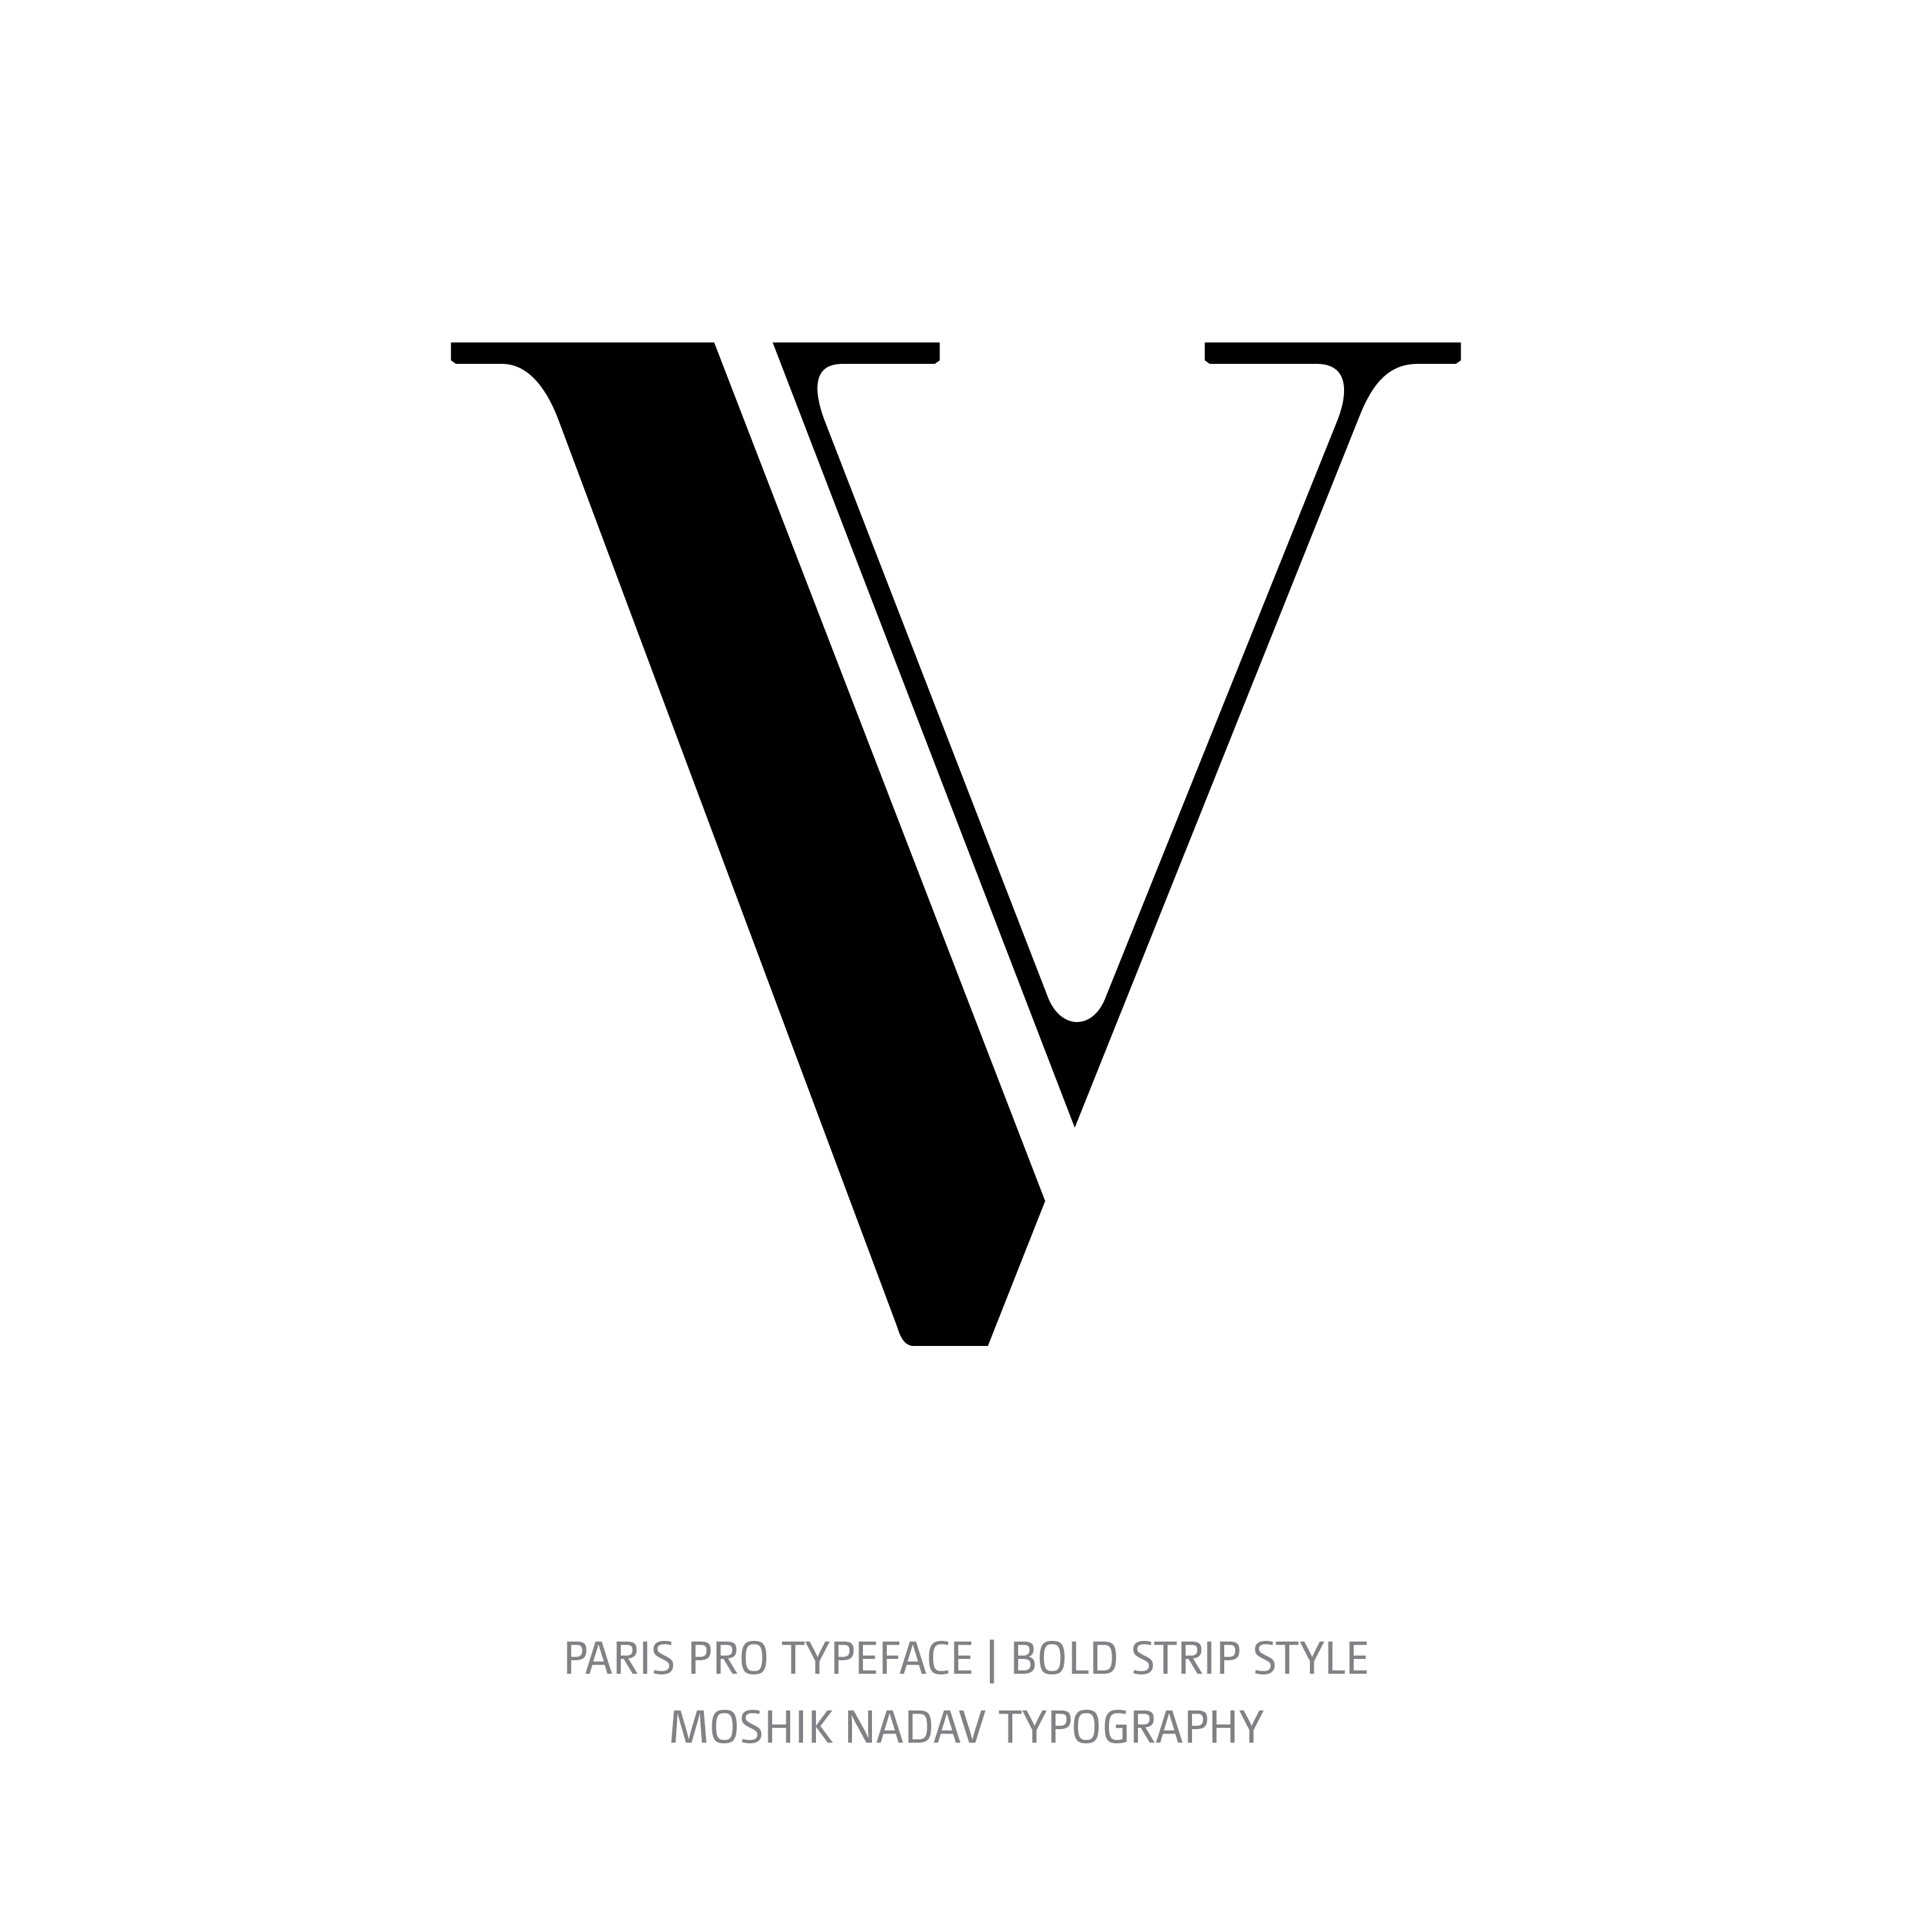 Paris Pro Typeface Bold Strip V